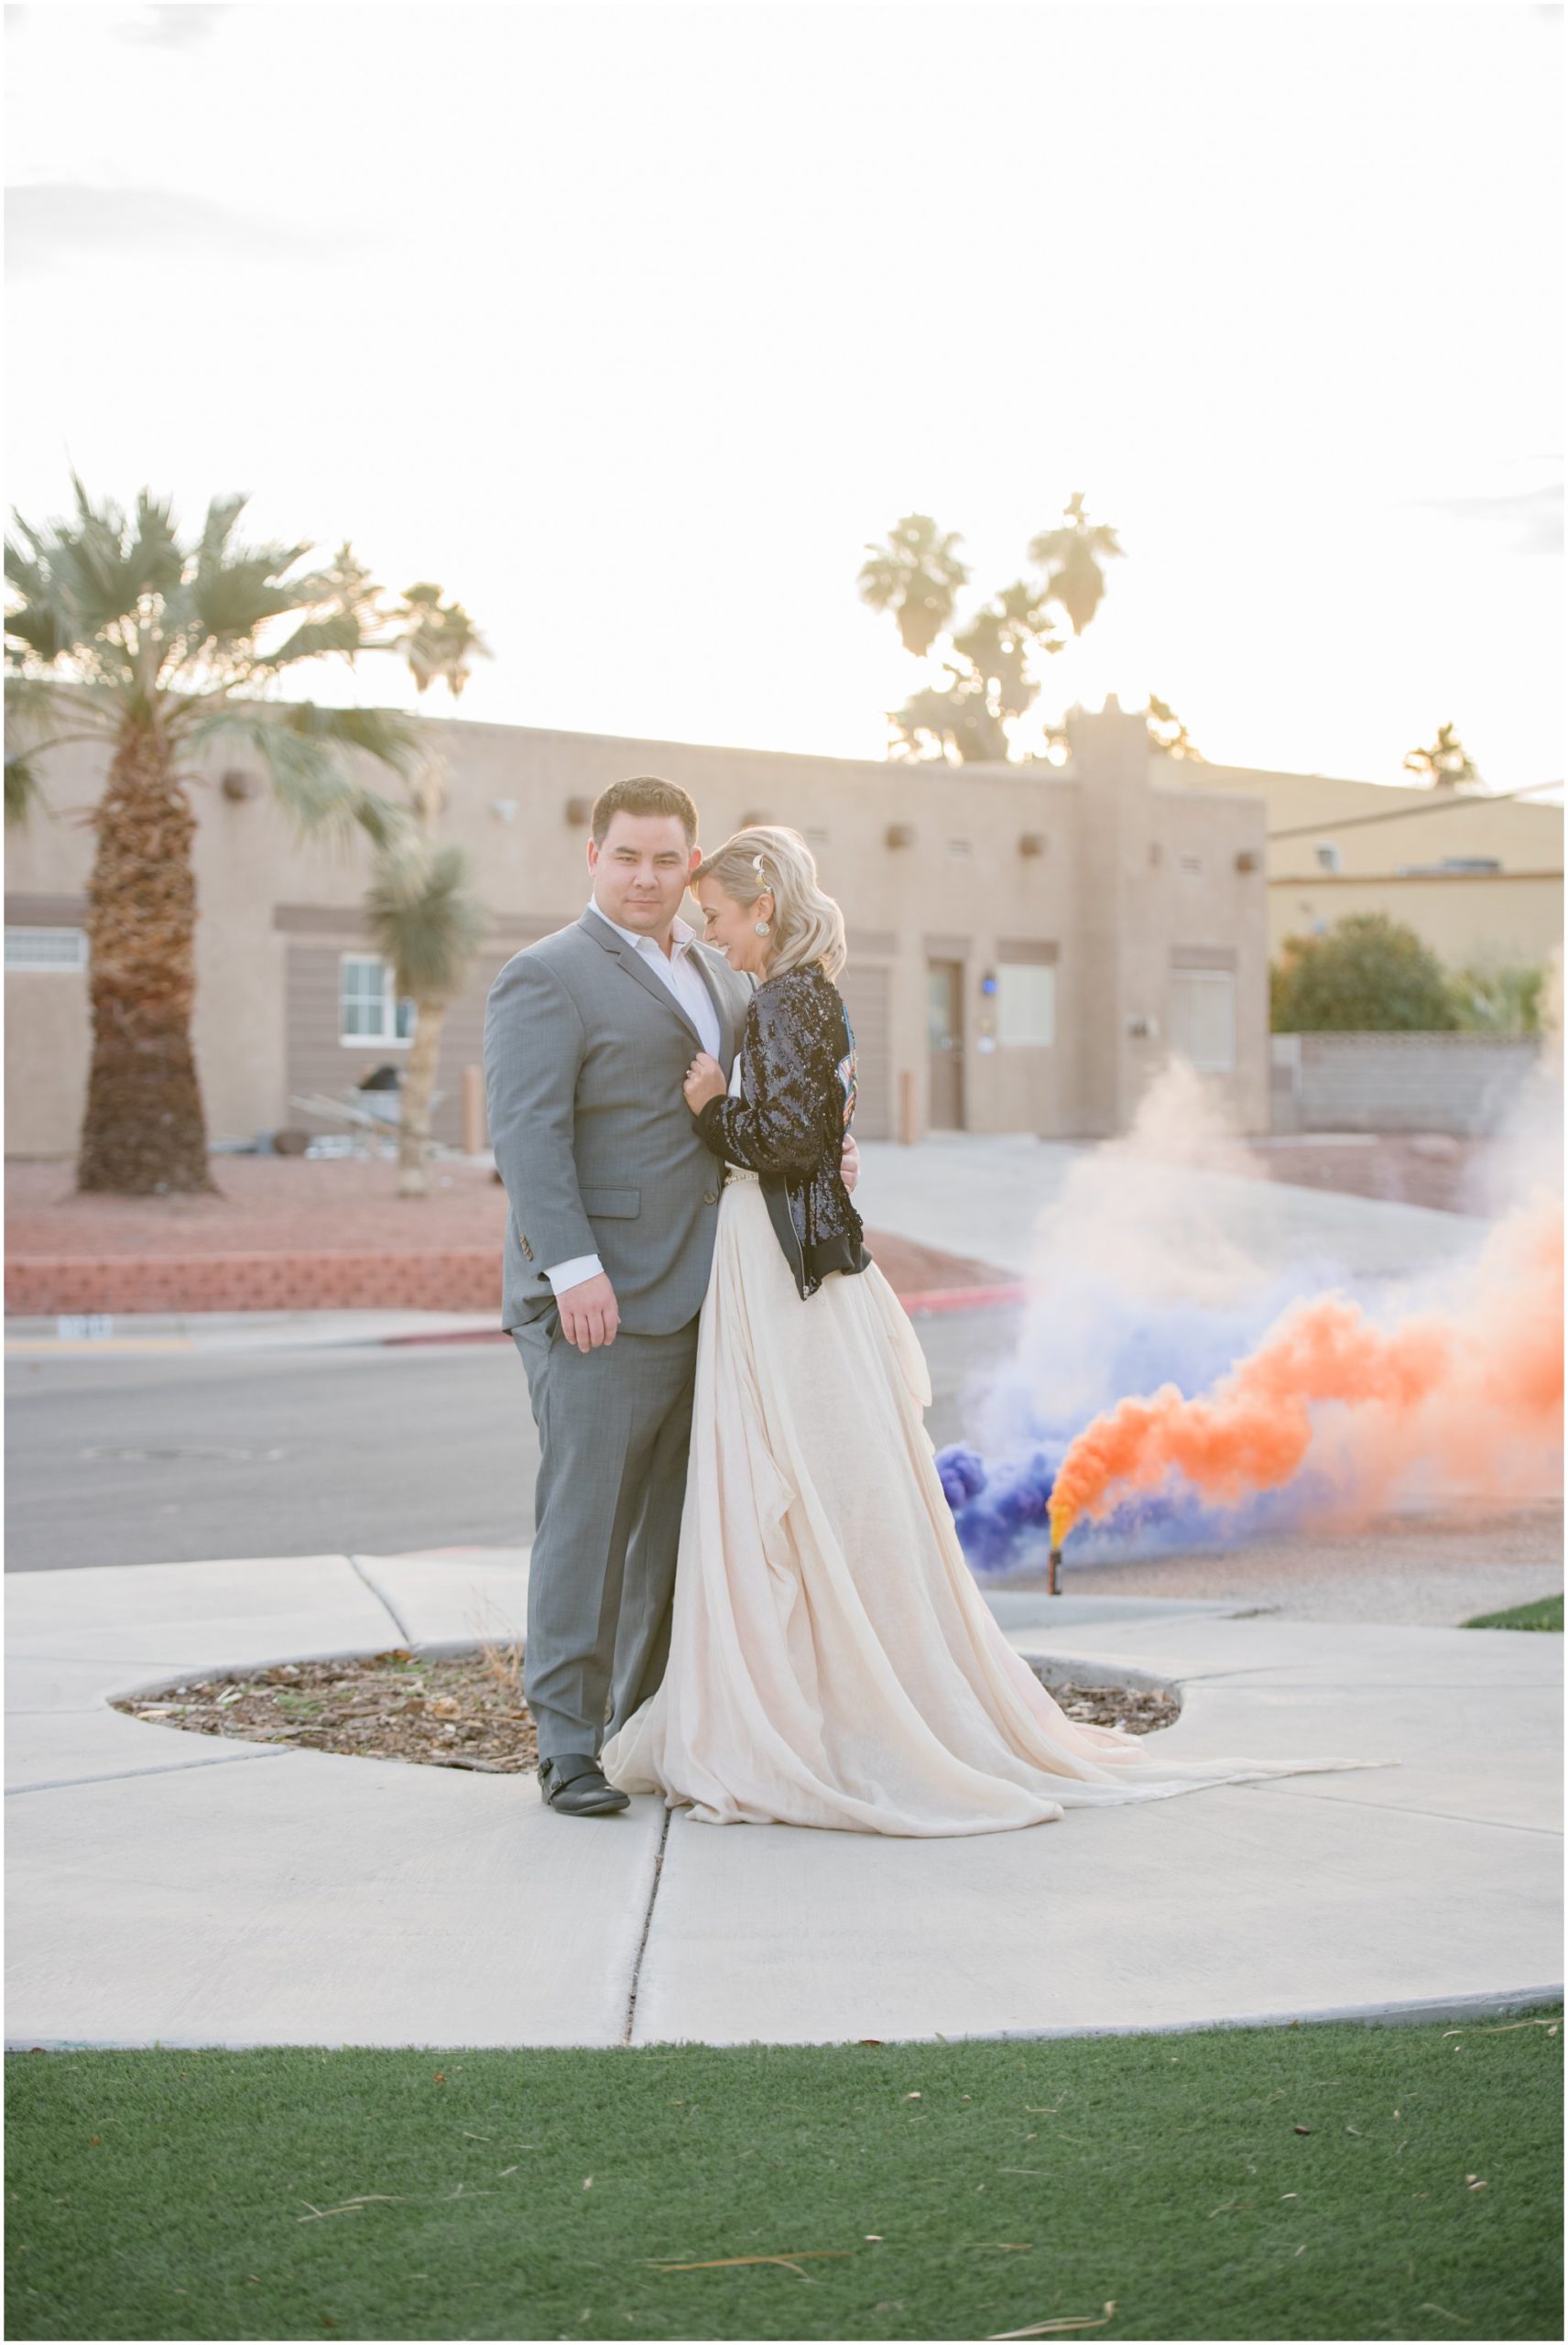 Unique Wedding Smoke Bomb Ideas